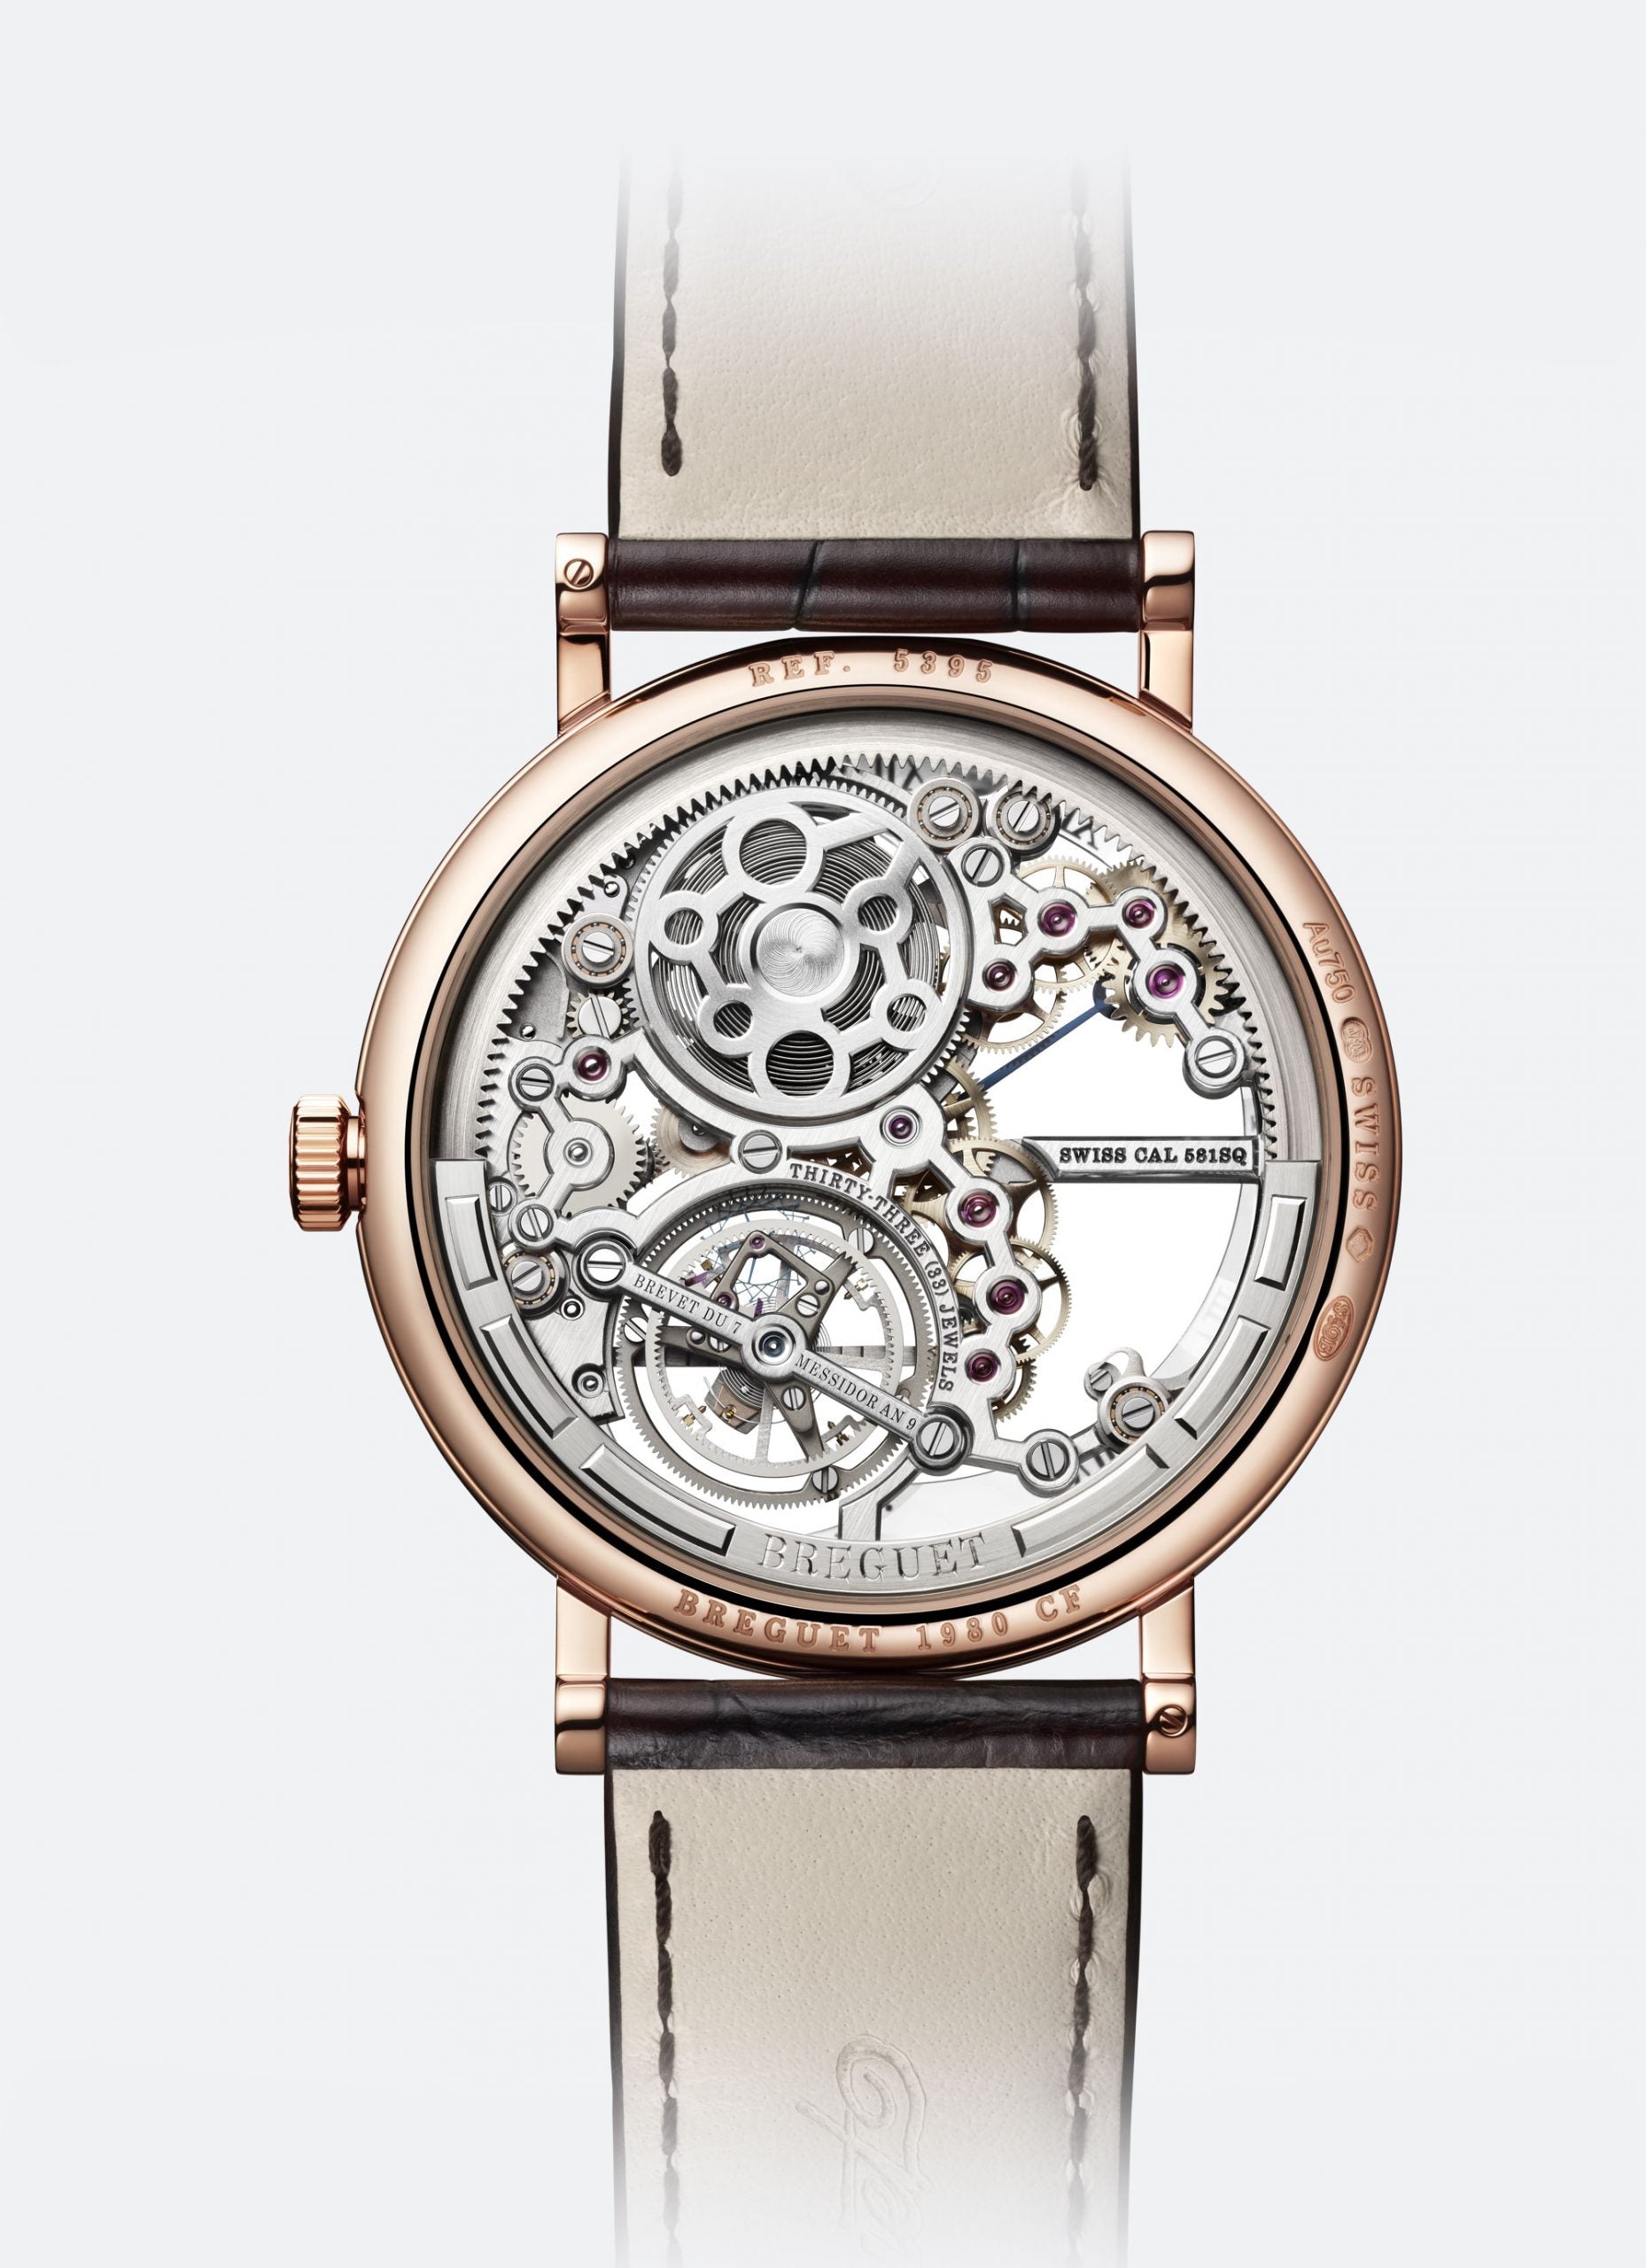 Breguet Classique Grande Complication 18K Rose Gold Men's Watch